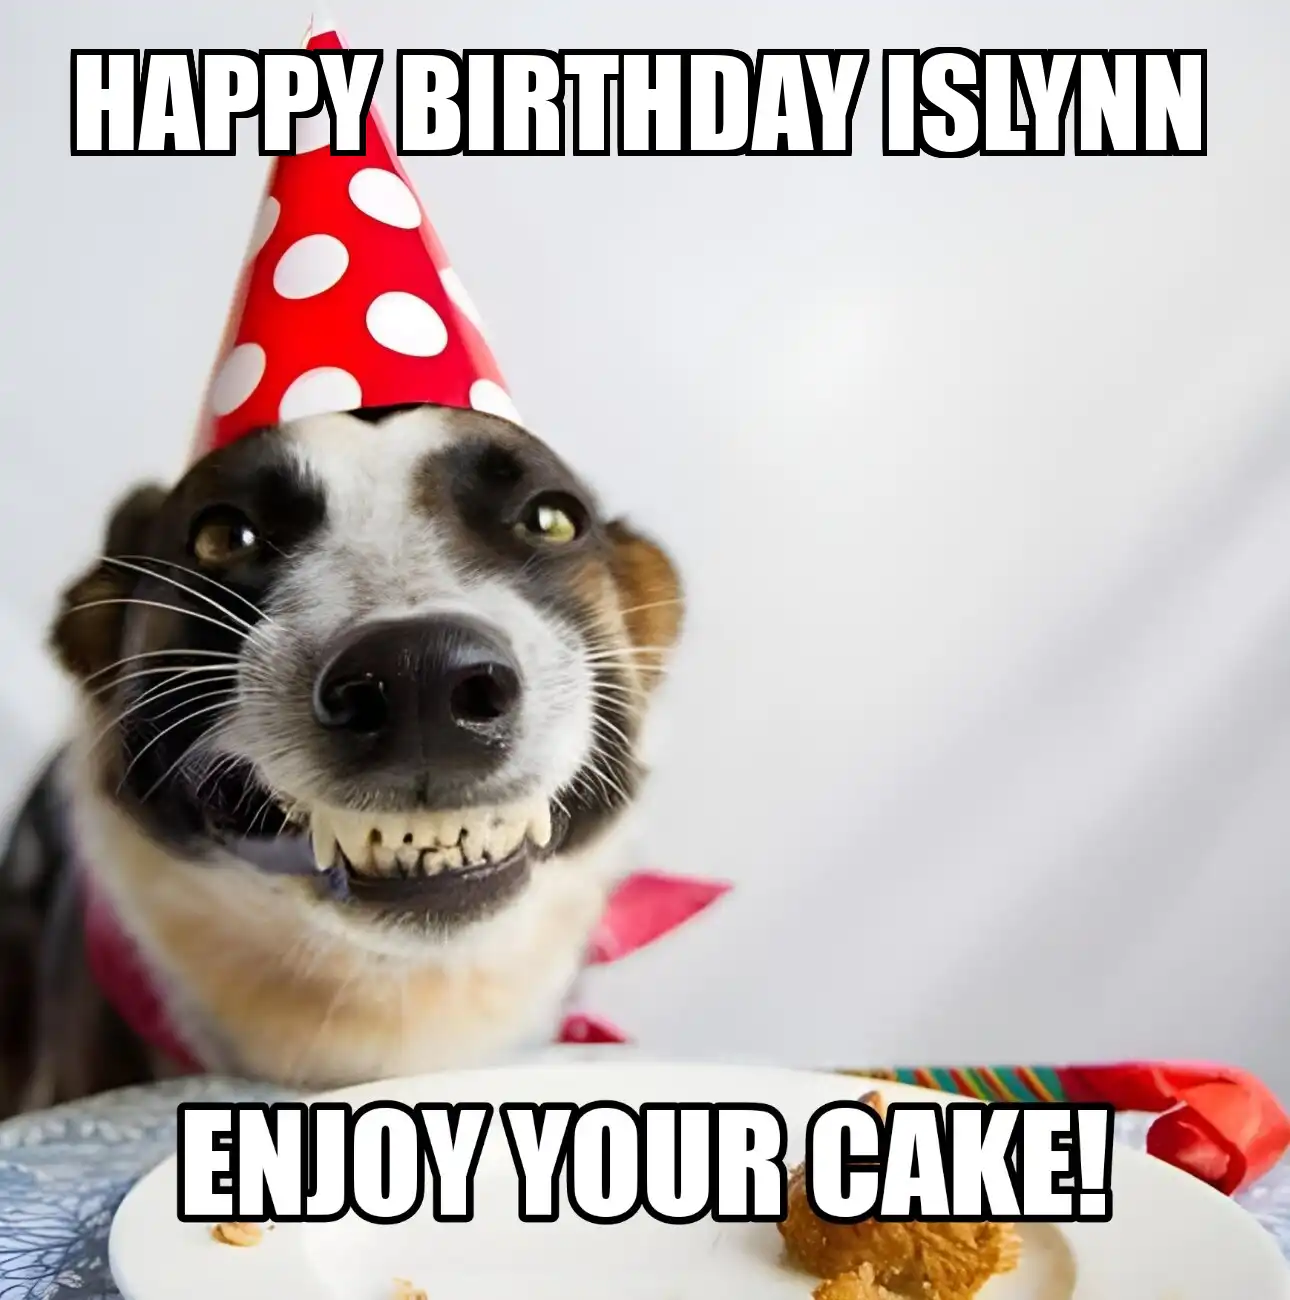 Happy Birthday Islynn Enjoy Your Cake Dog Meme